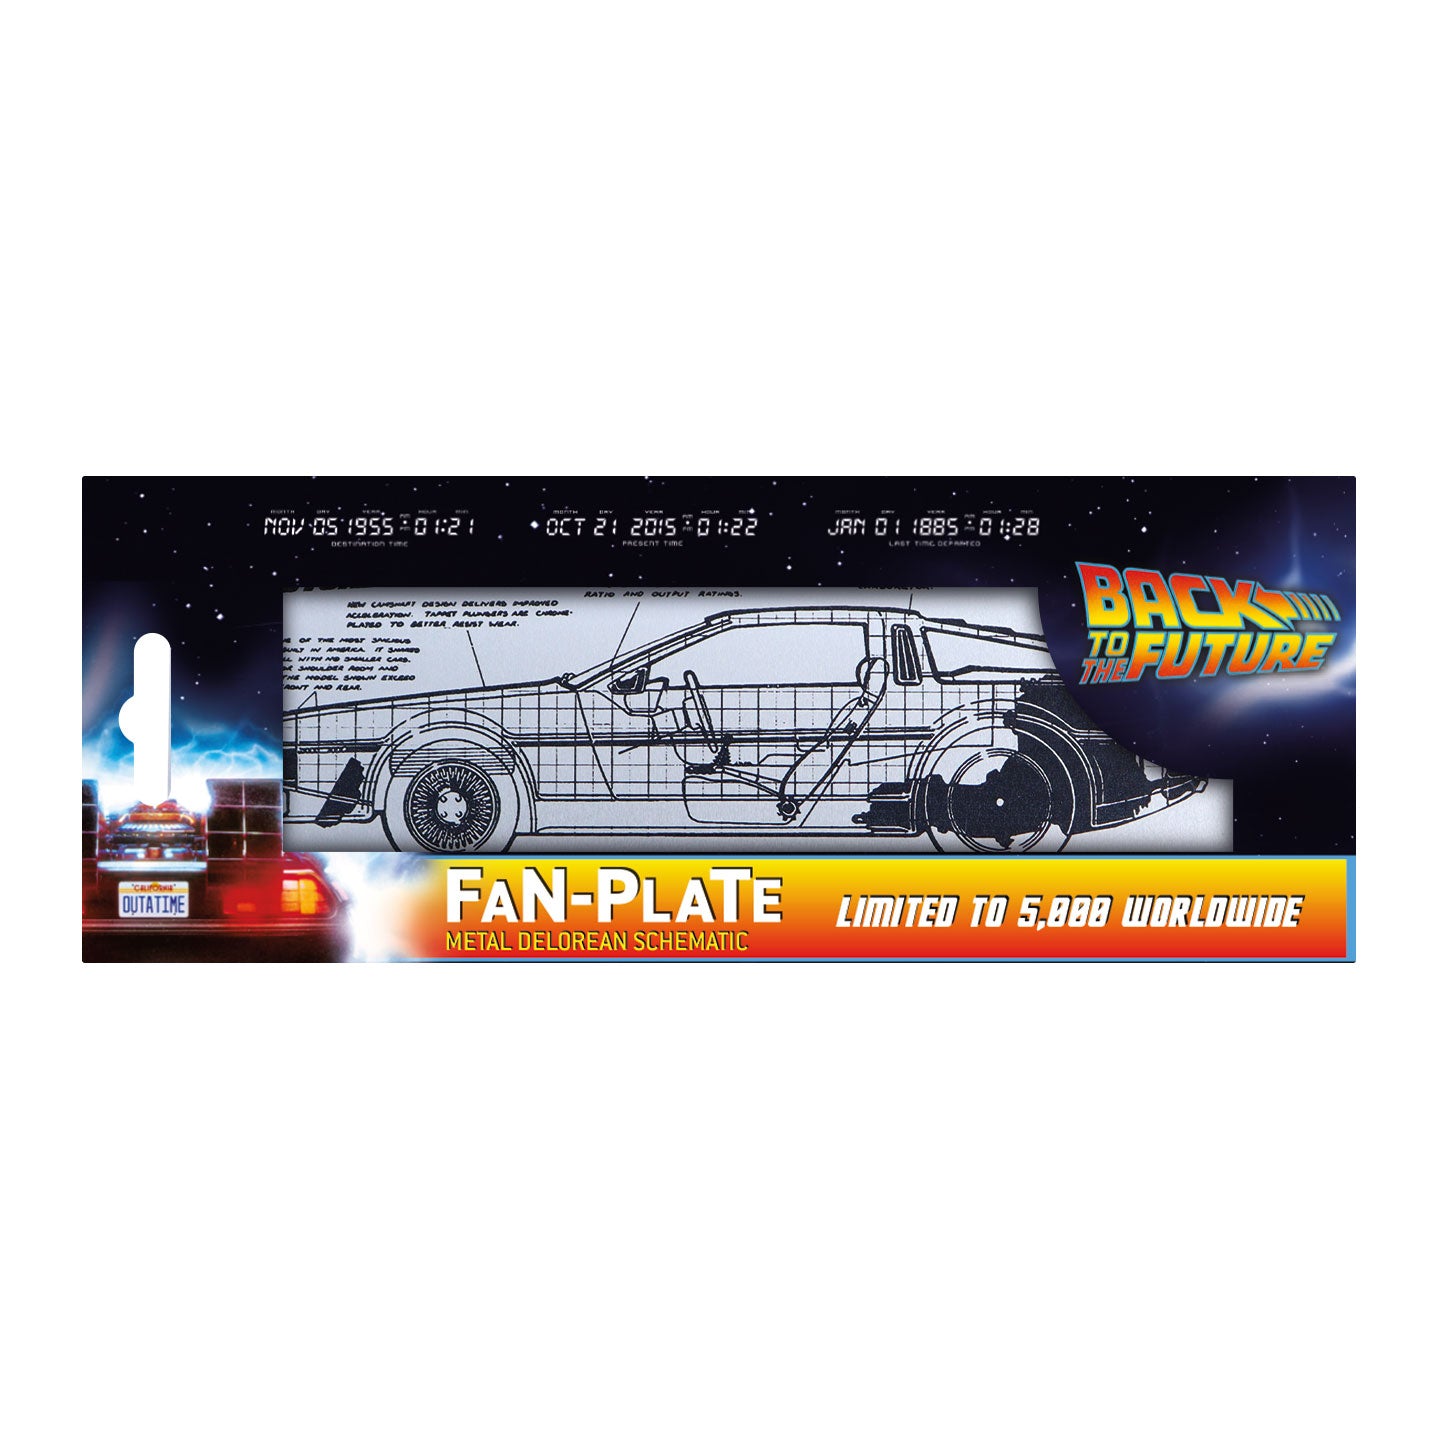 Back to the Future Limited Edition DeLorean Schematic Fan-Plate